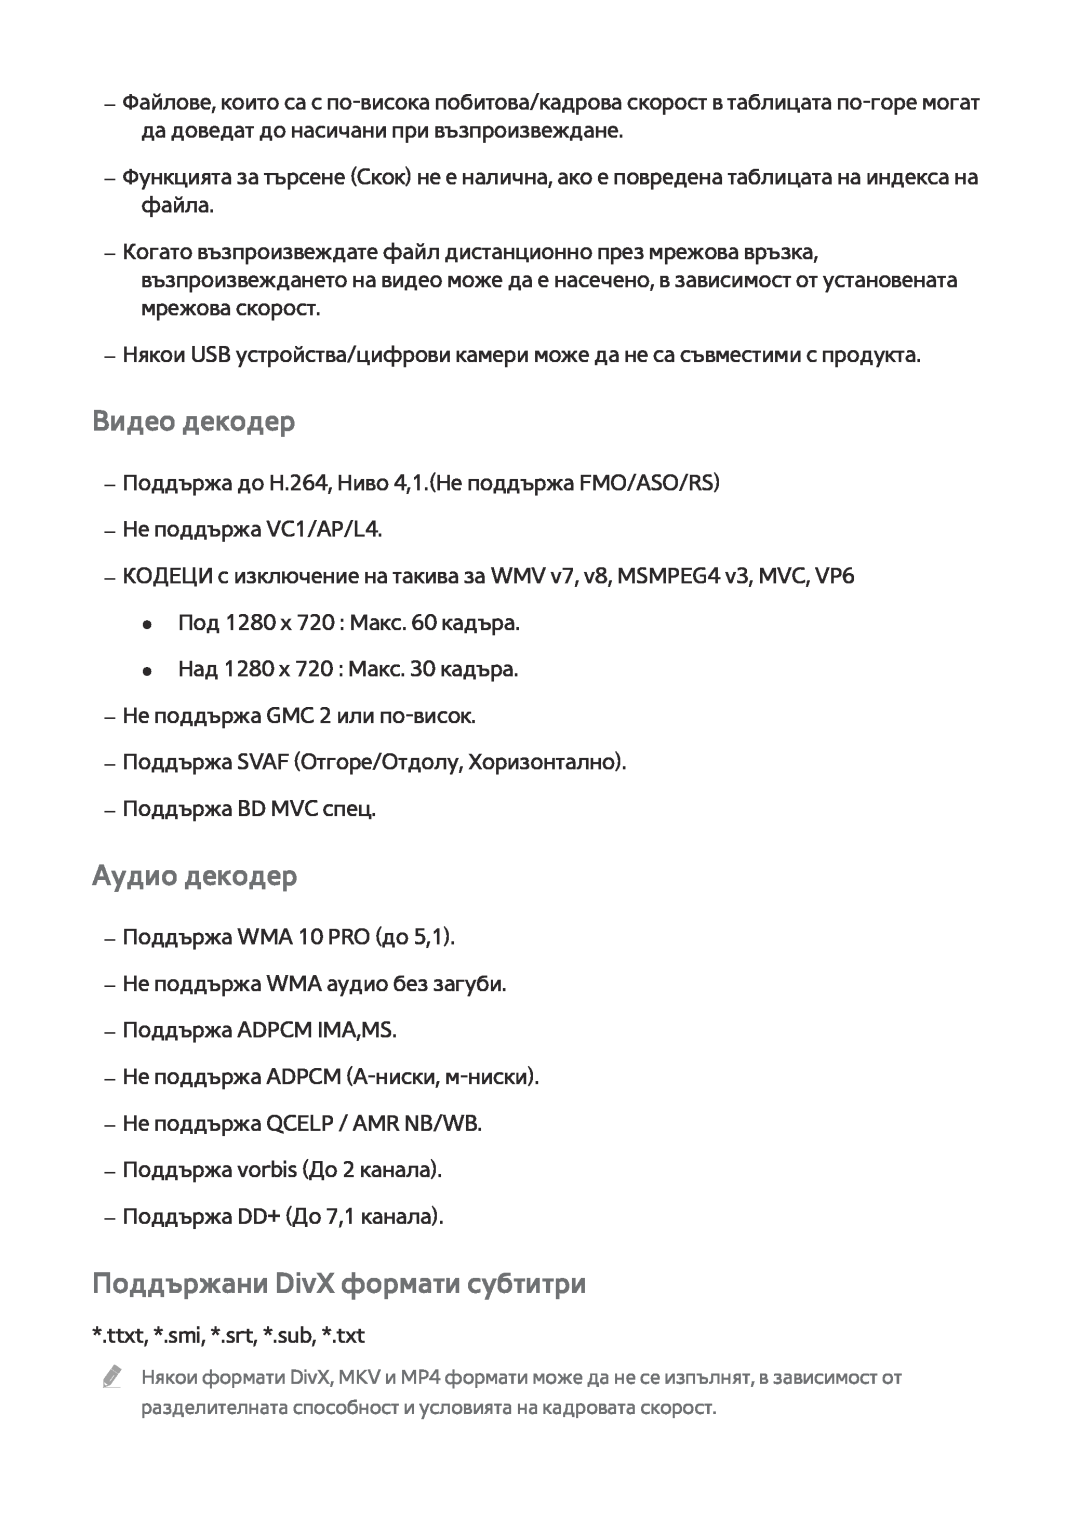 Samsung BD-F8500/EN, BD-F6900/EN manual Видео декодер, Аудио декодер, Поддържани DivX формати субтитри 